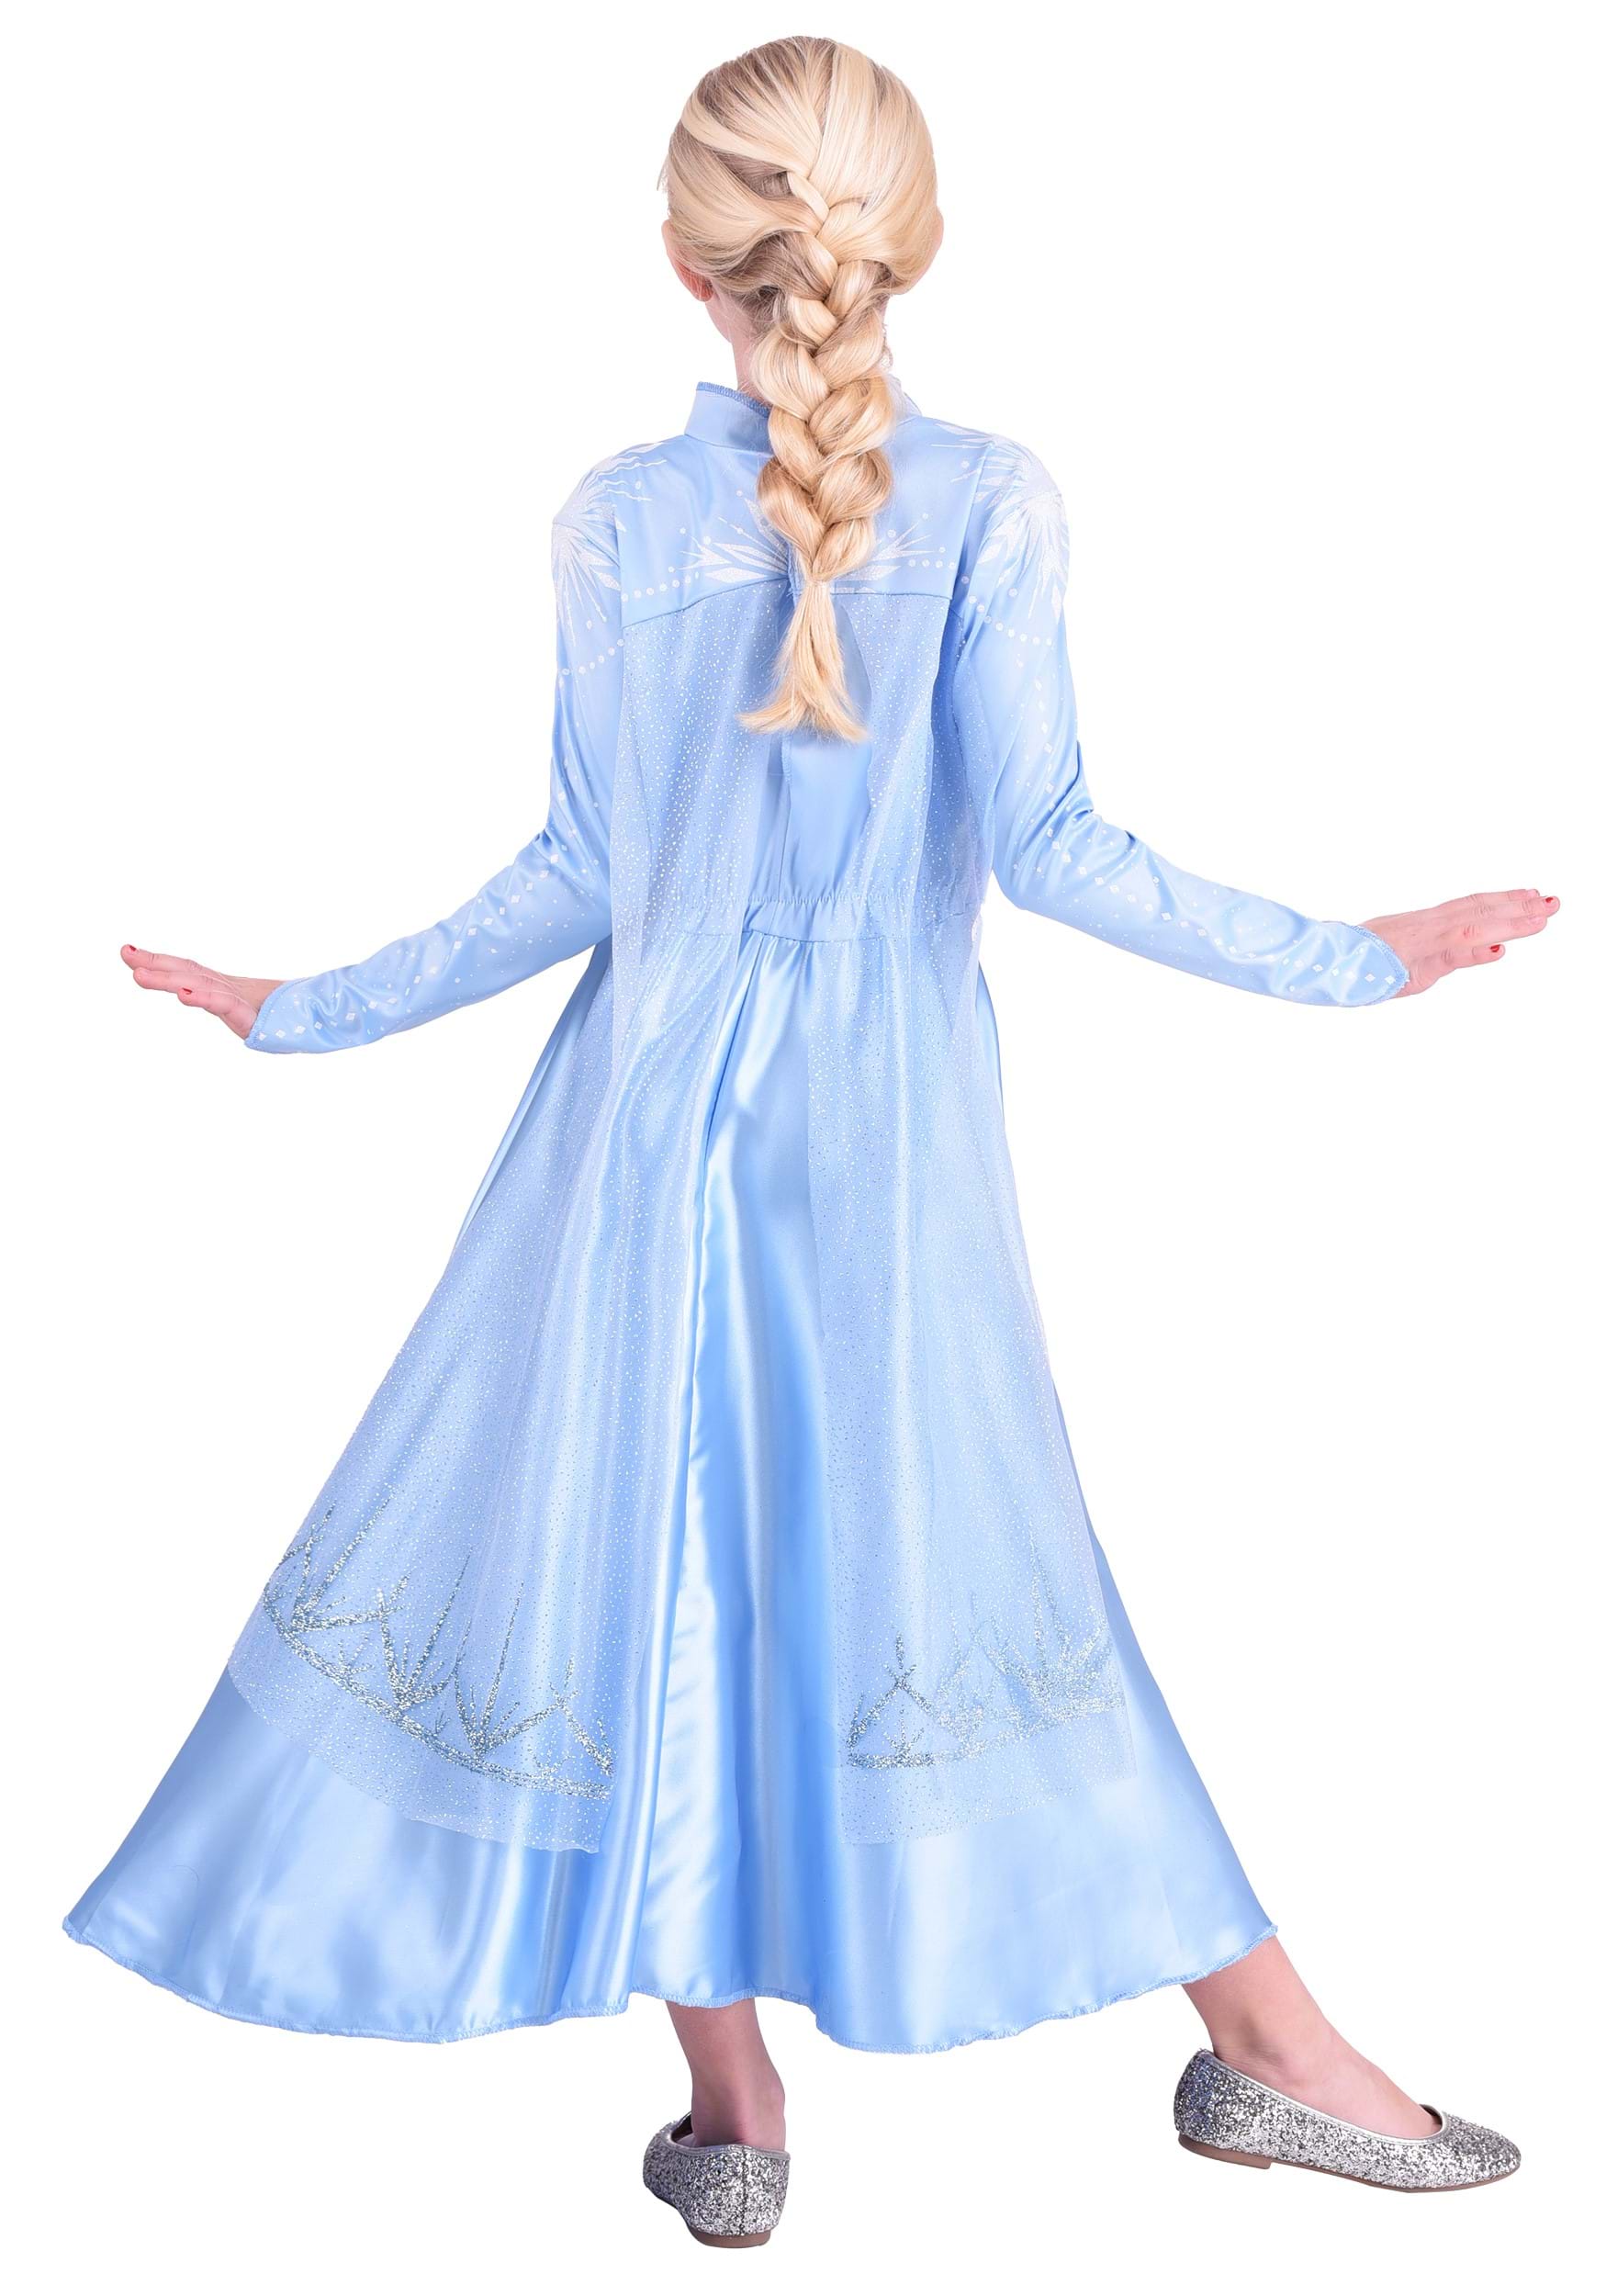 2019 New Release Girls Frozen 2 Elsa Costume Party Birthday Dress size  2-10Yrs